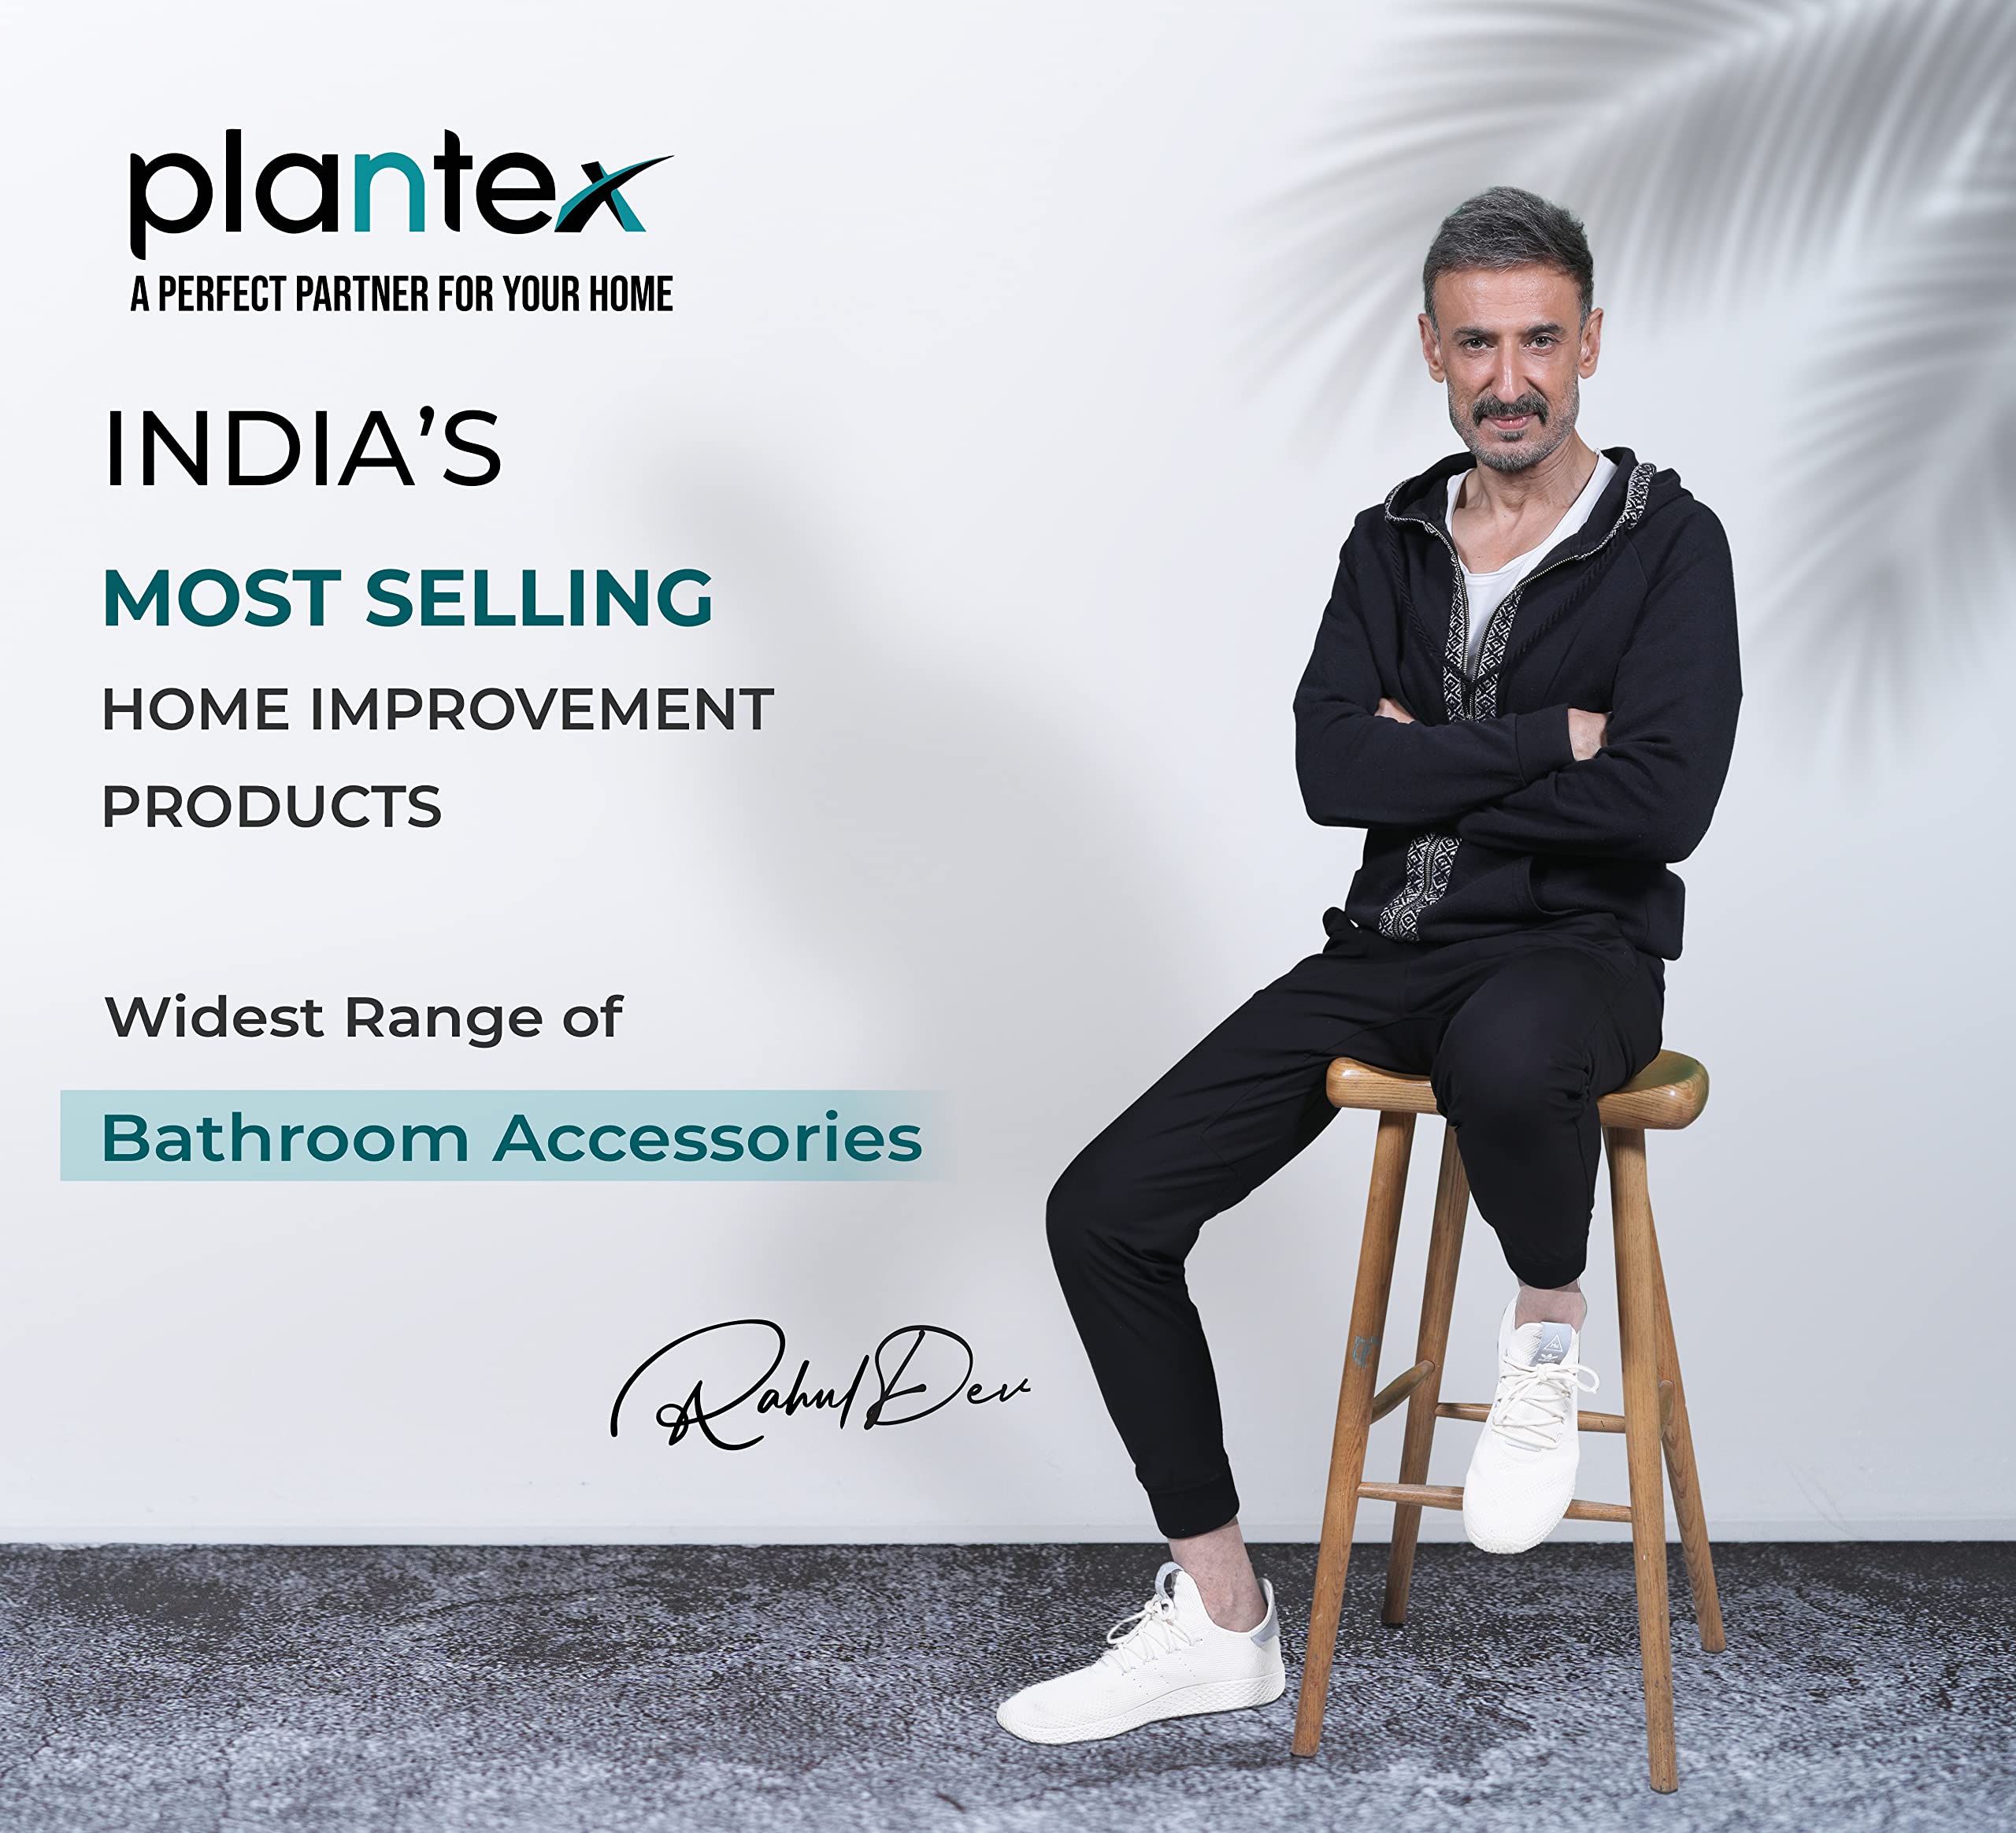 Plantex Smero Fully Brass Towel Rod/Rack for Bathroom/Hanger/Towel Stand/Holder Bathroom Accessories - 24 Inch,Chrome (AQ-8132)